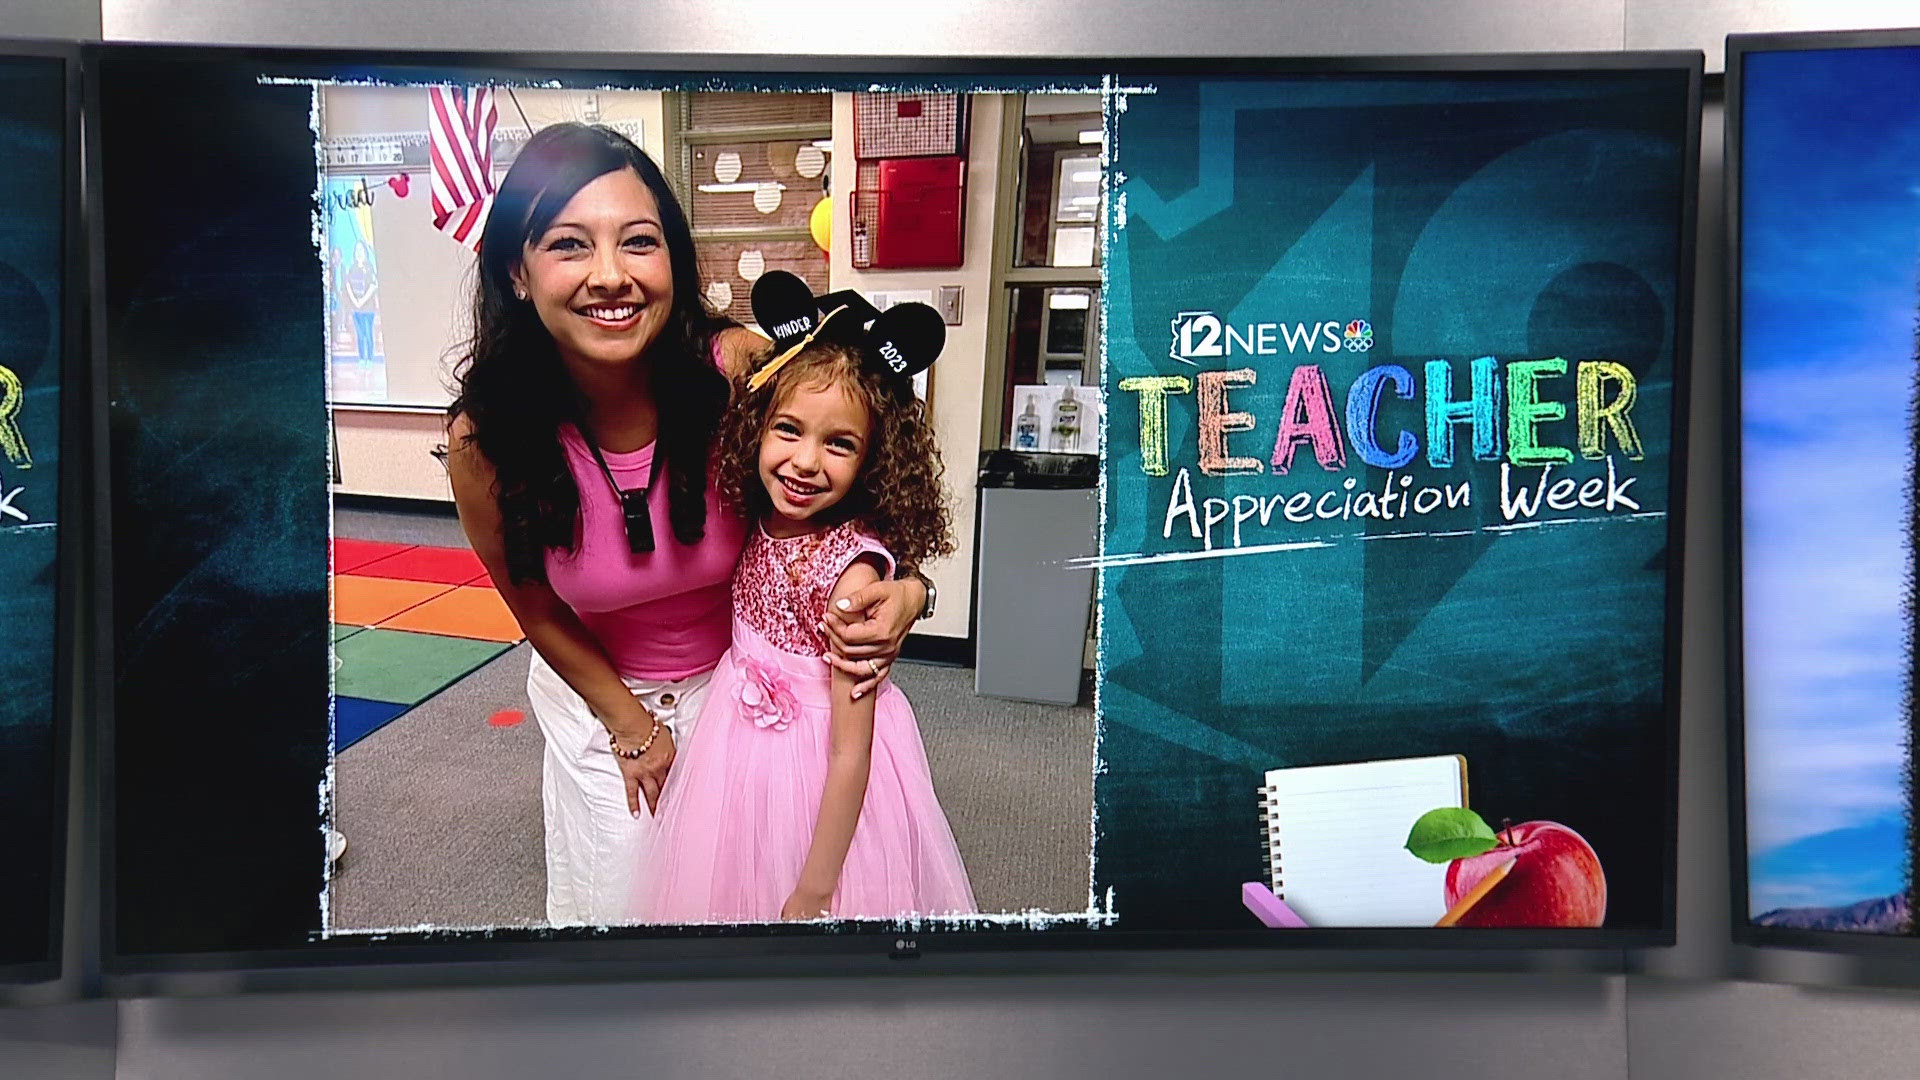 12News is proud to celebrate Teacher Appreciation Week!